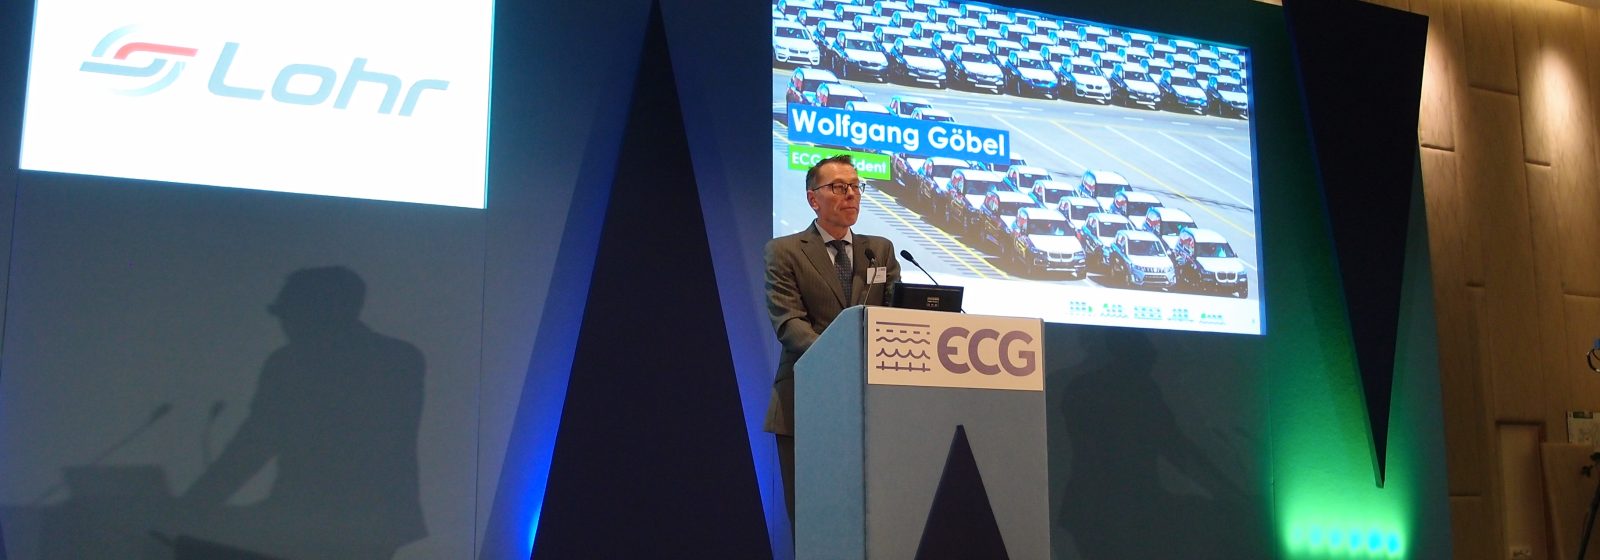 Wolfgang Göbel